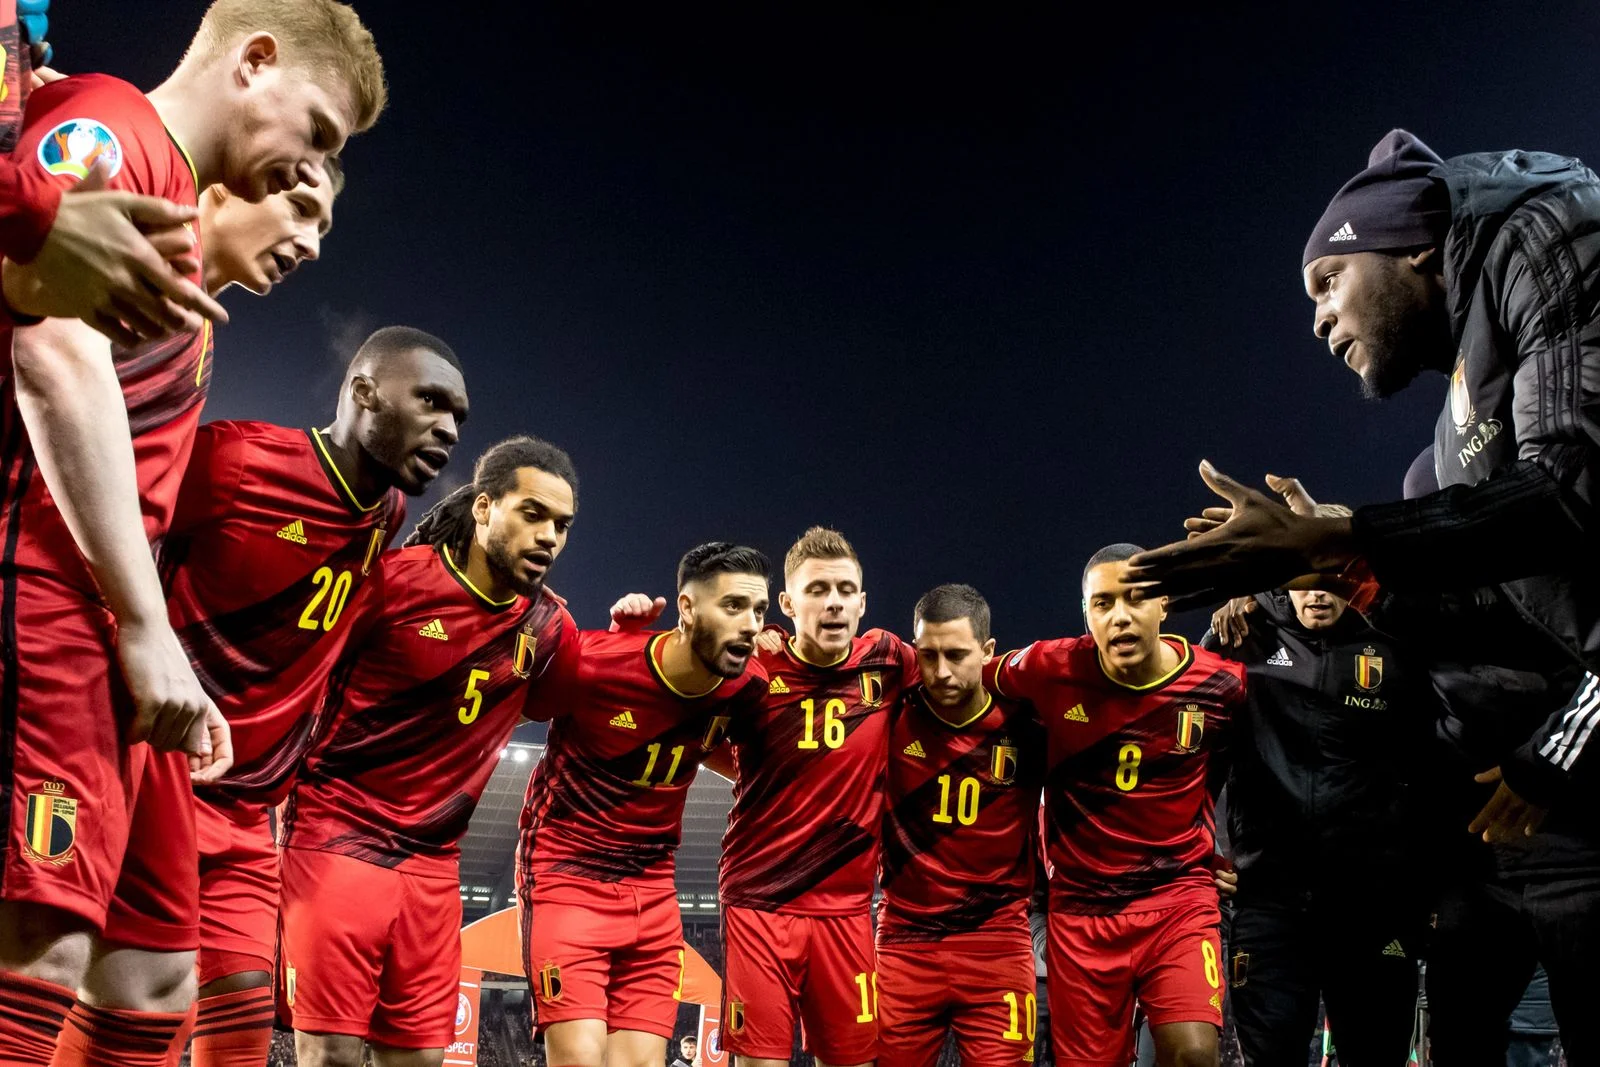 Belgium World Cup